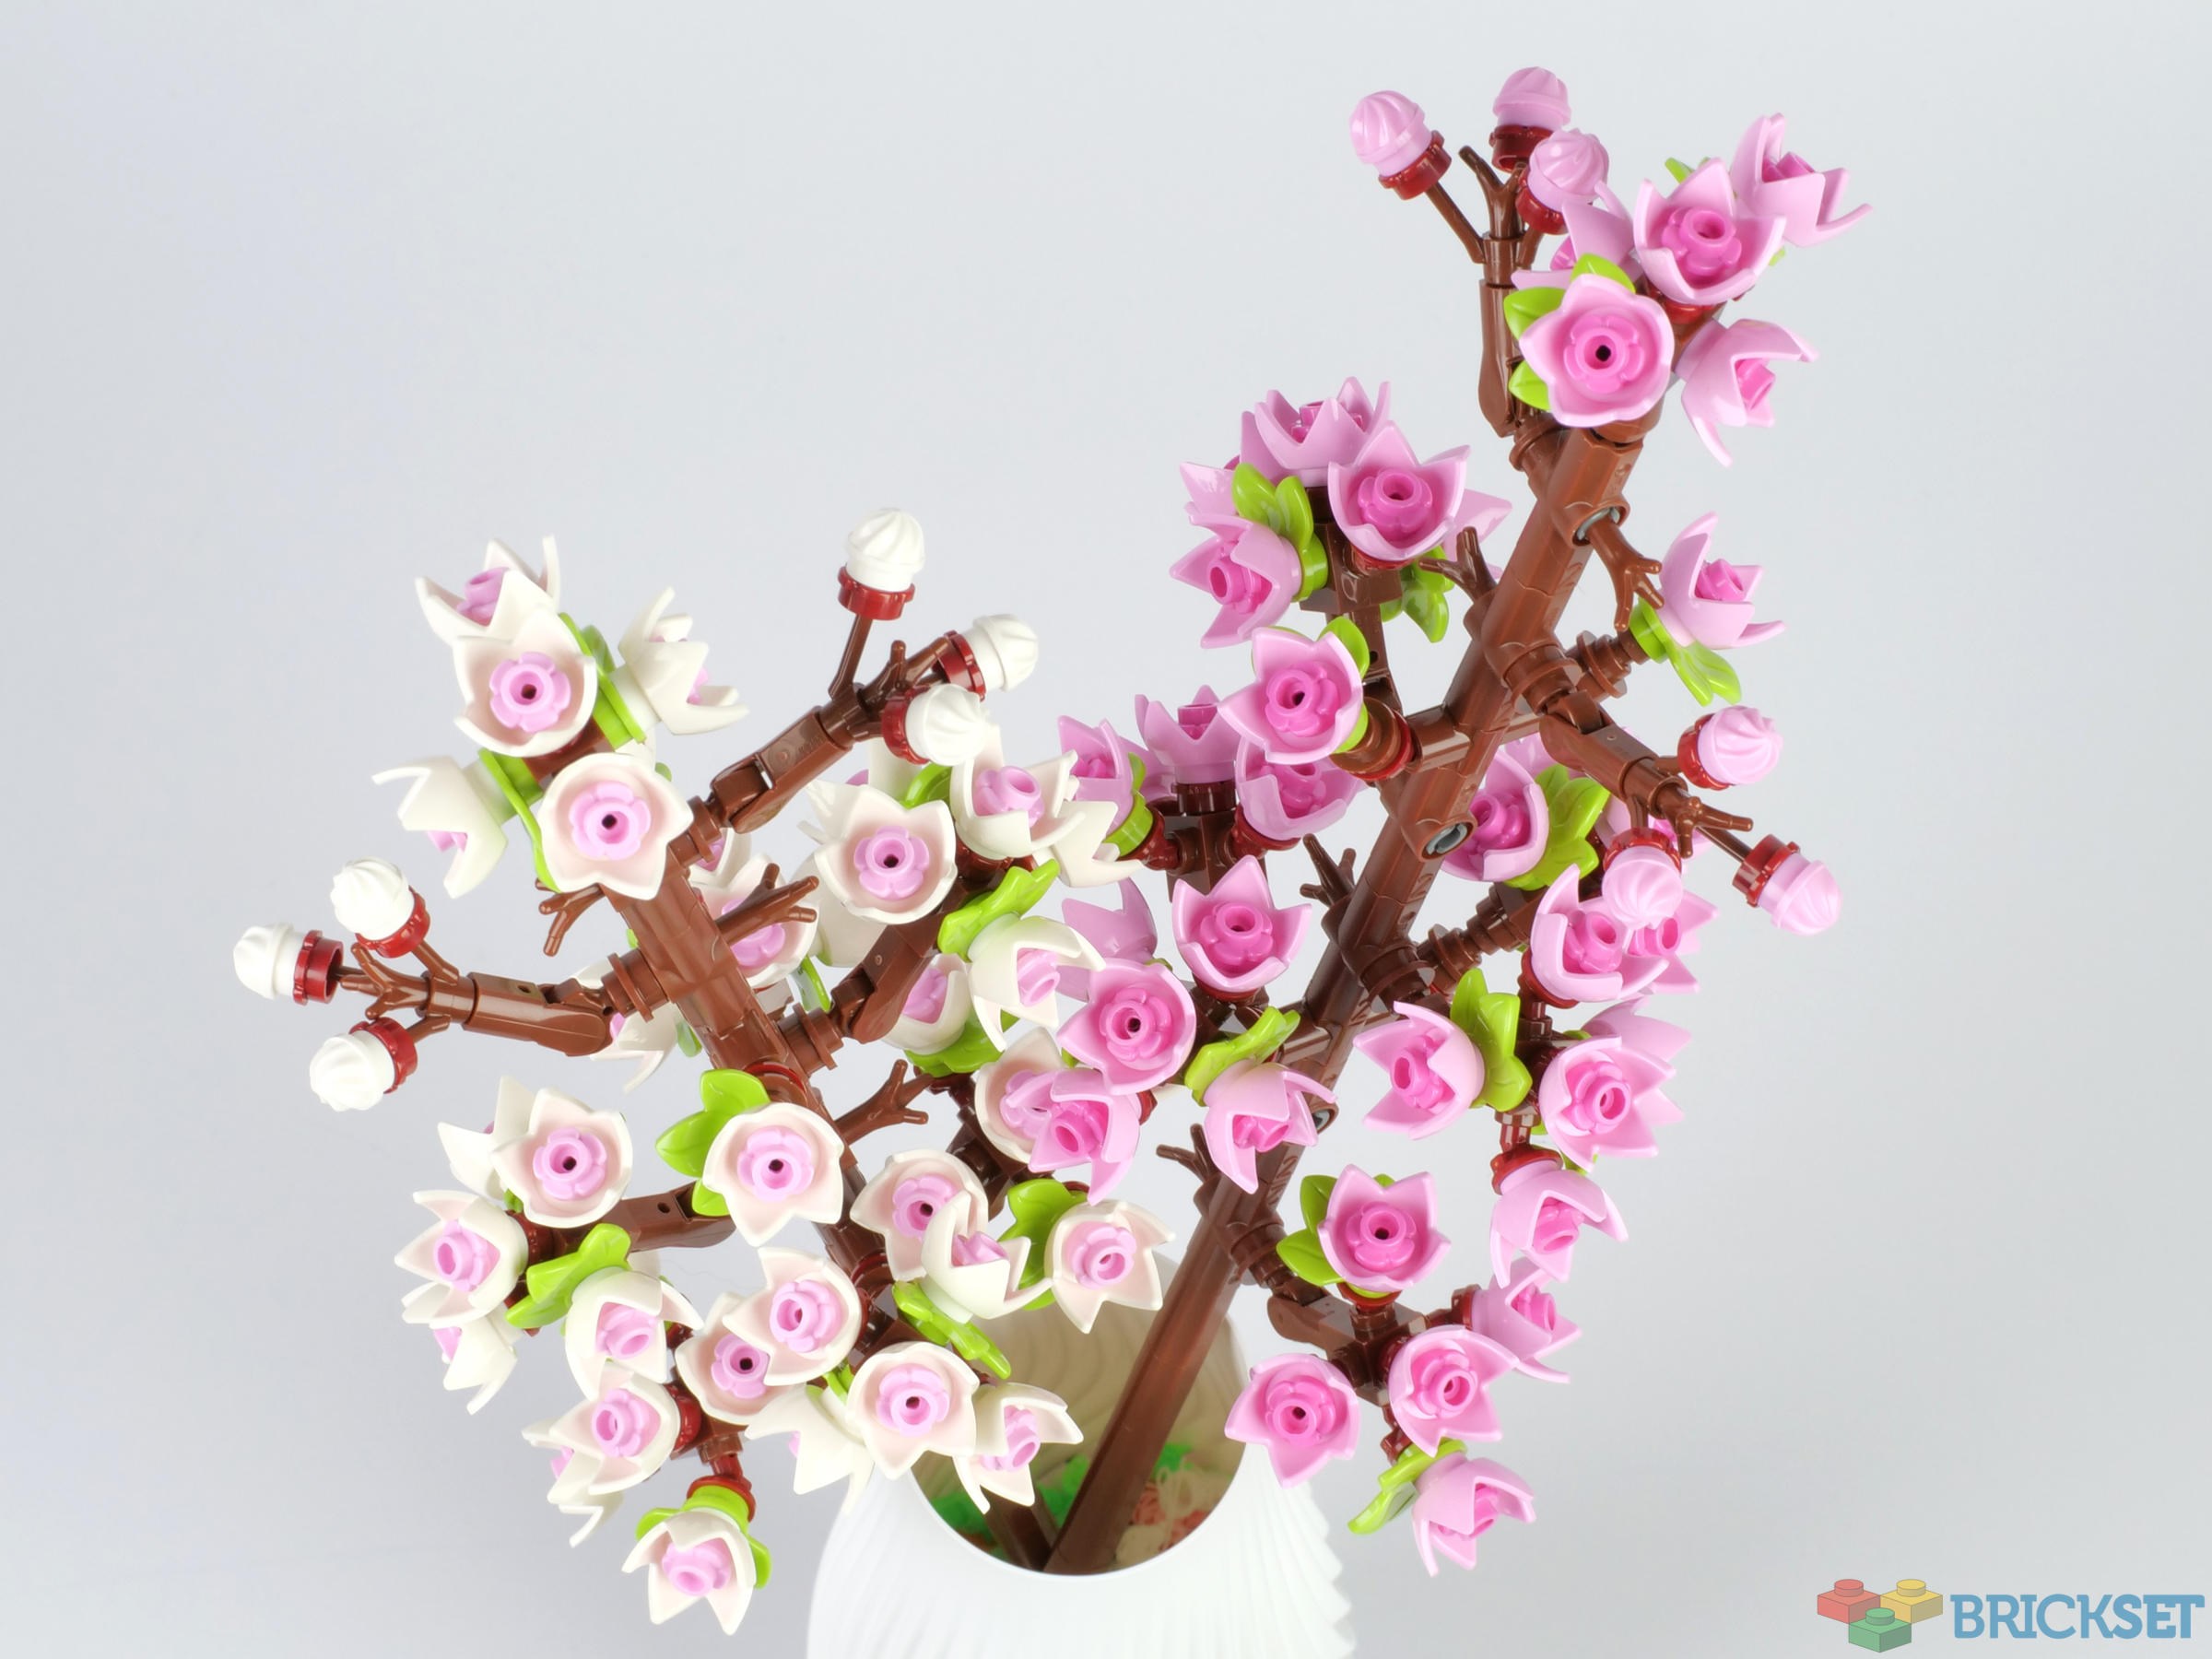 LEGO 40725 Cherry Blossoms review